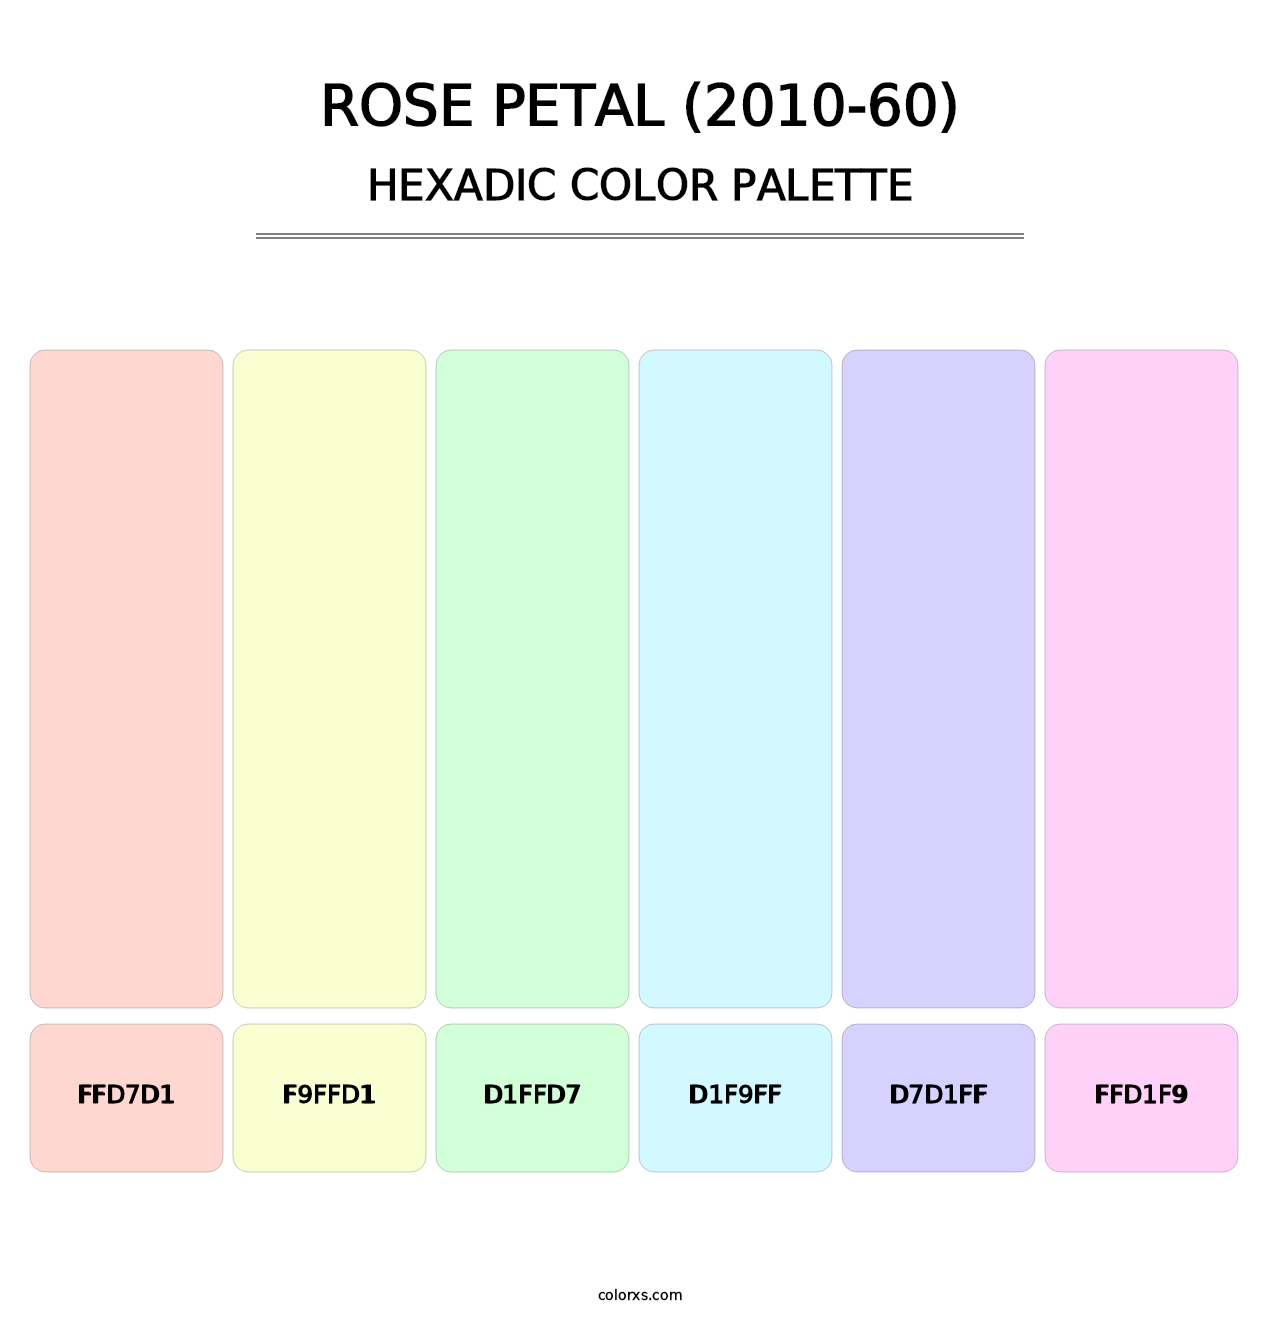 Rose Petal (2010-60) - Hexadic Color Palette